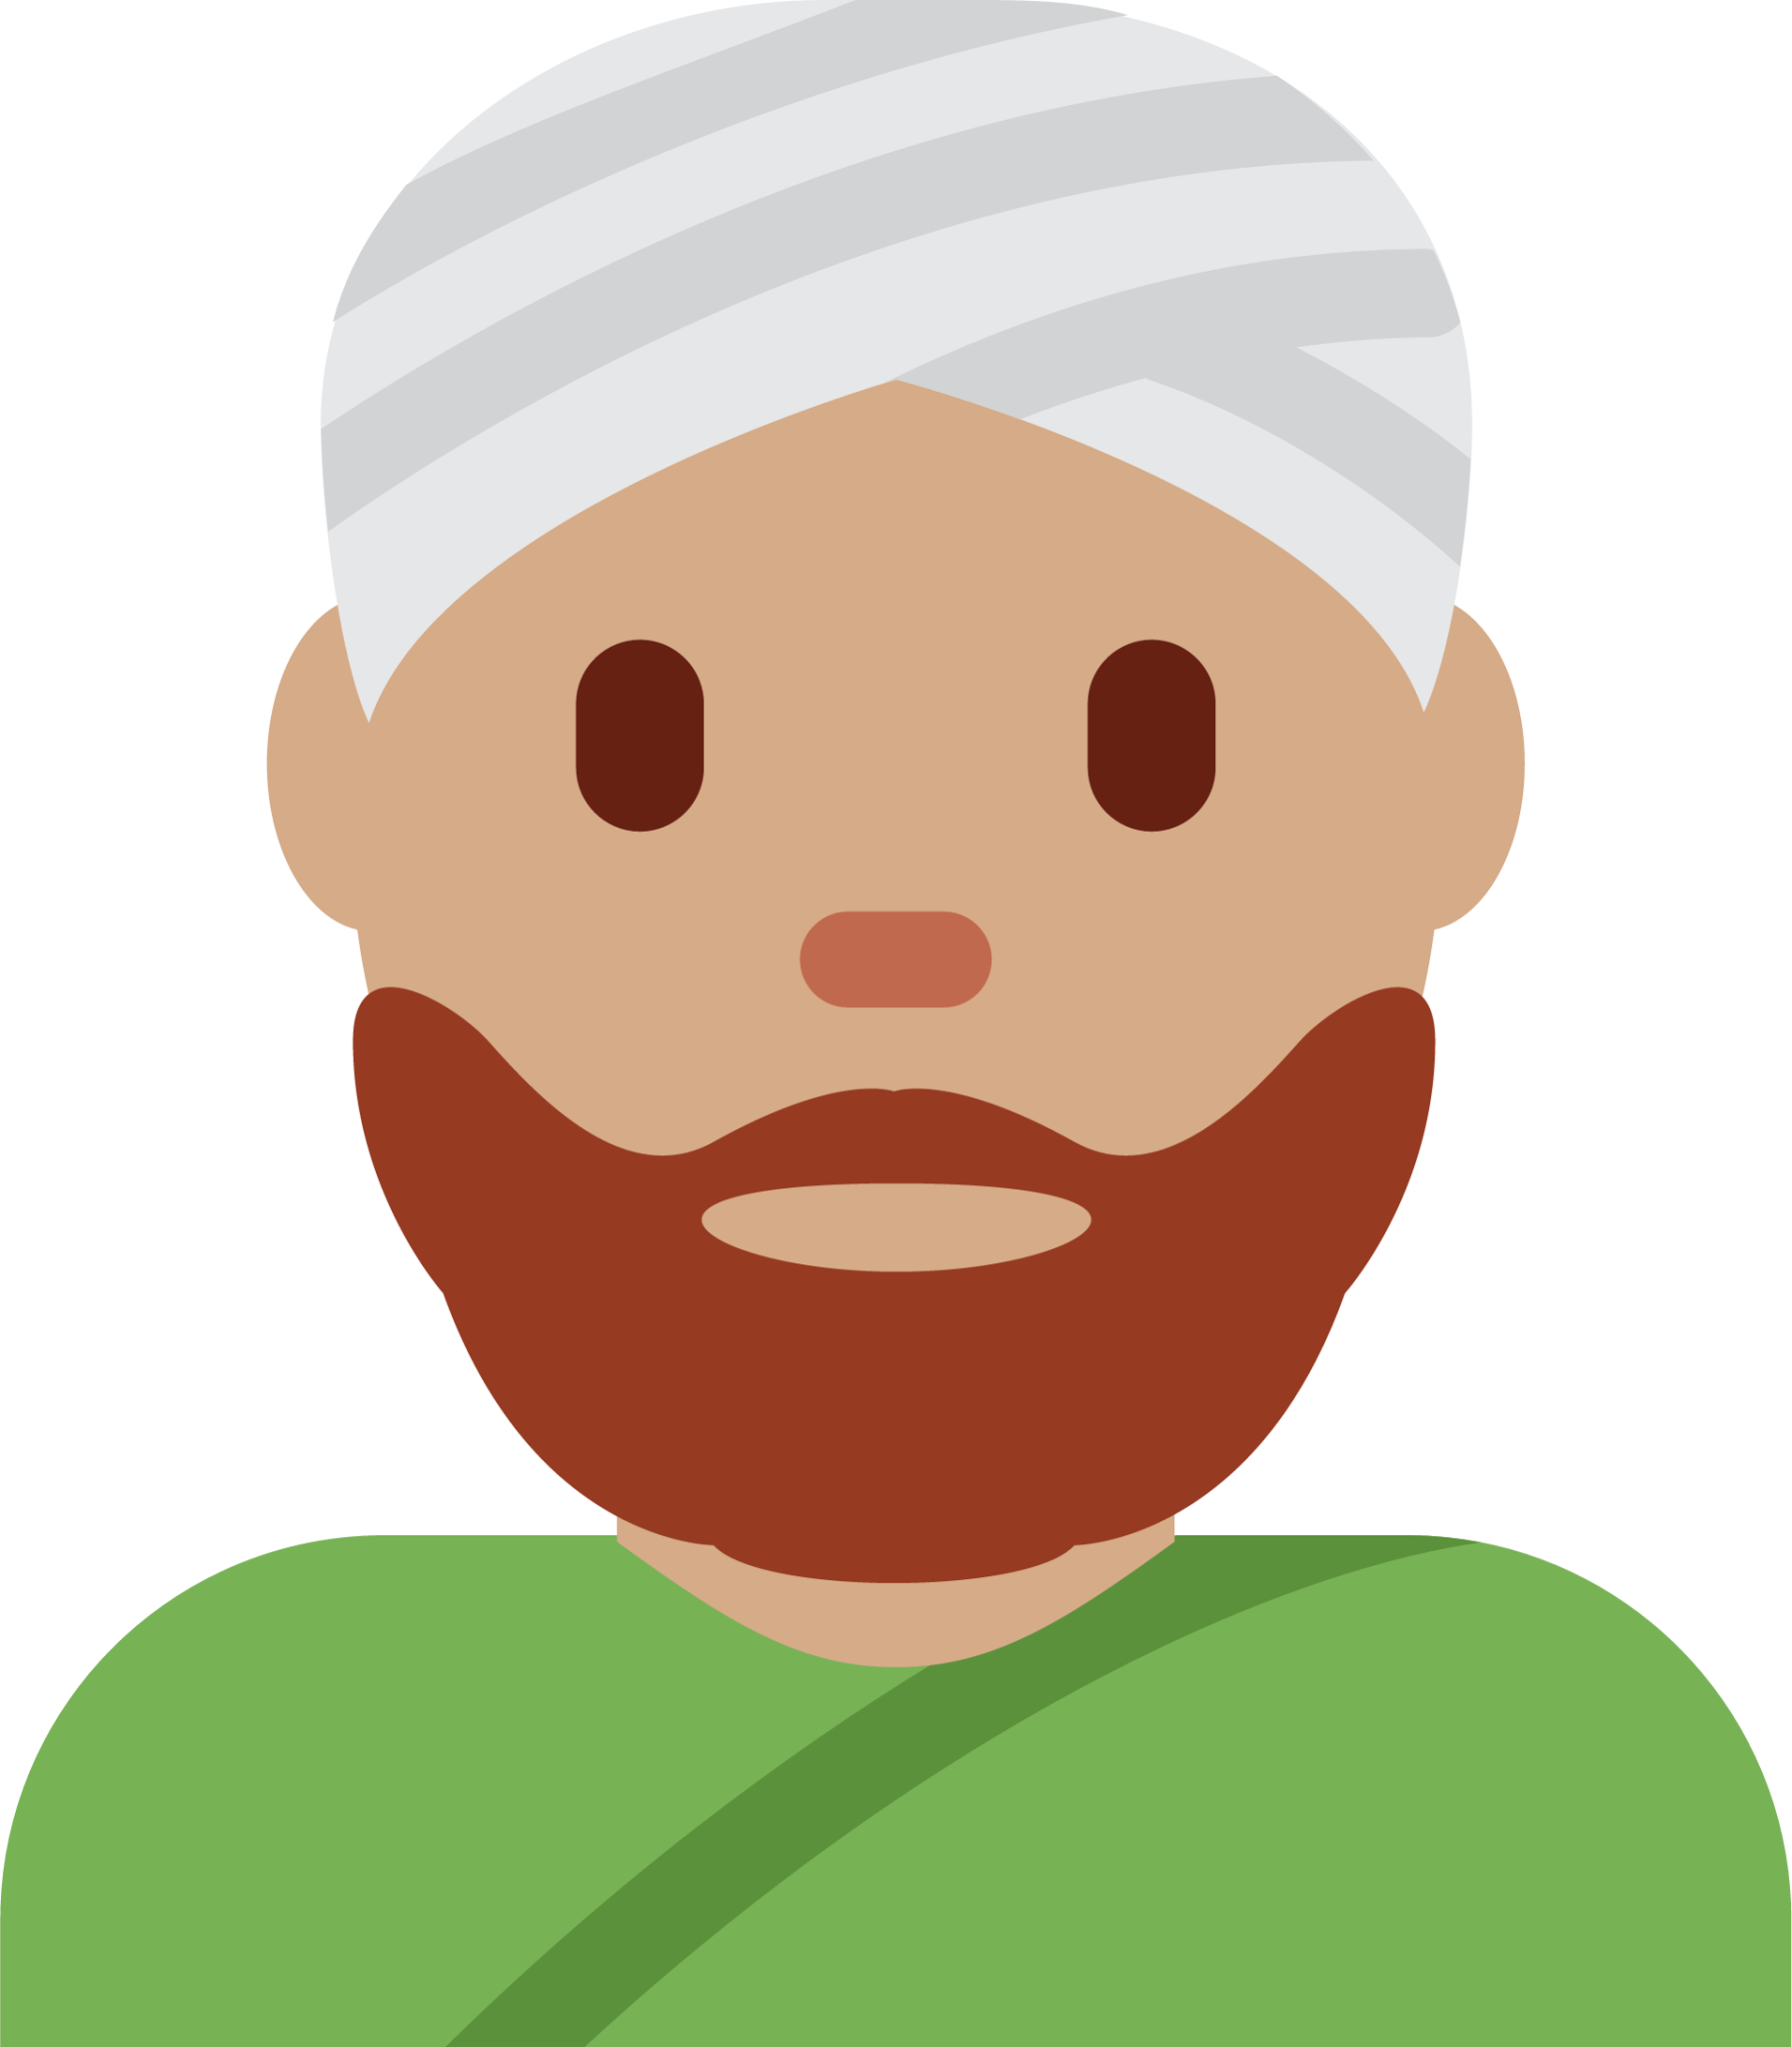 man wearing turban: medium skin tone emoji